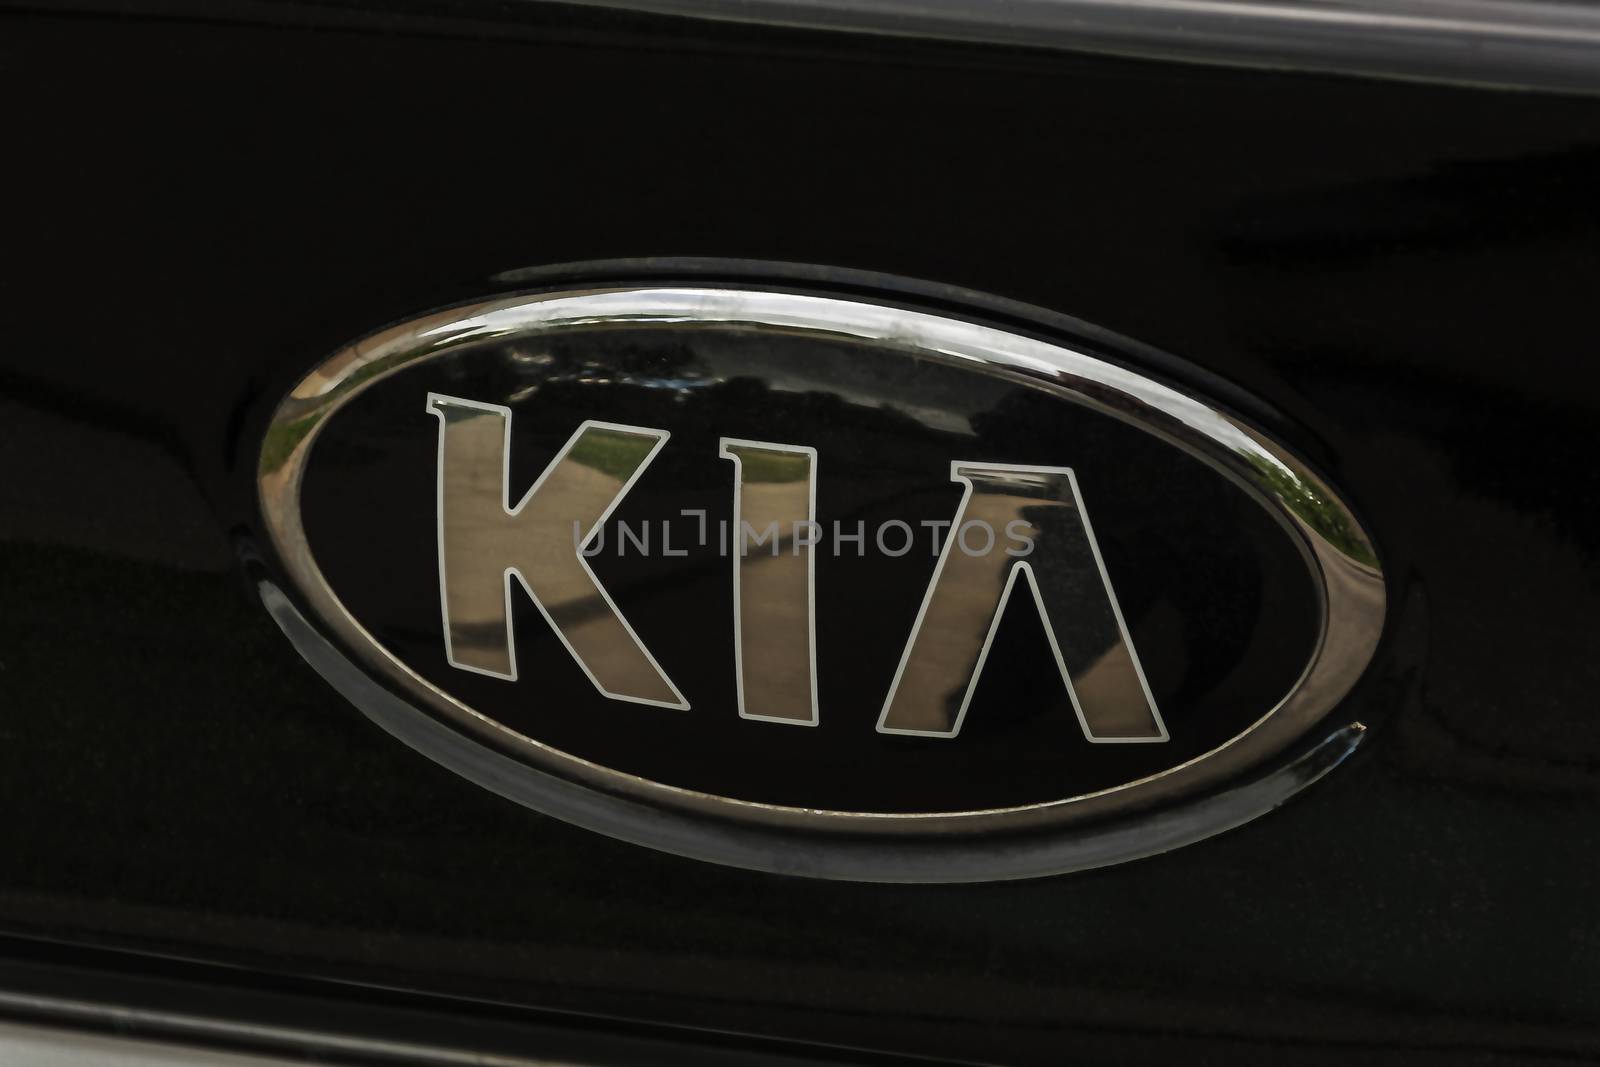 Germany, Berlin - May 26, 2017: the logo of the Korean automotive company KIA on the boot lid